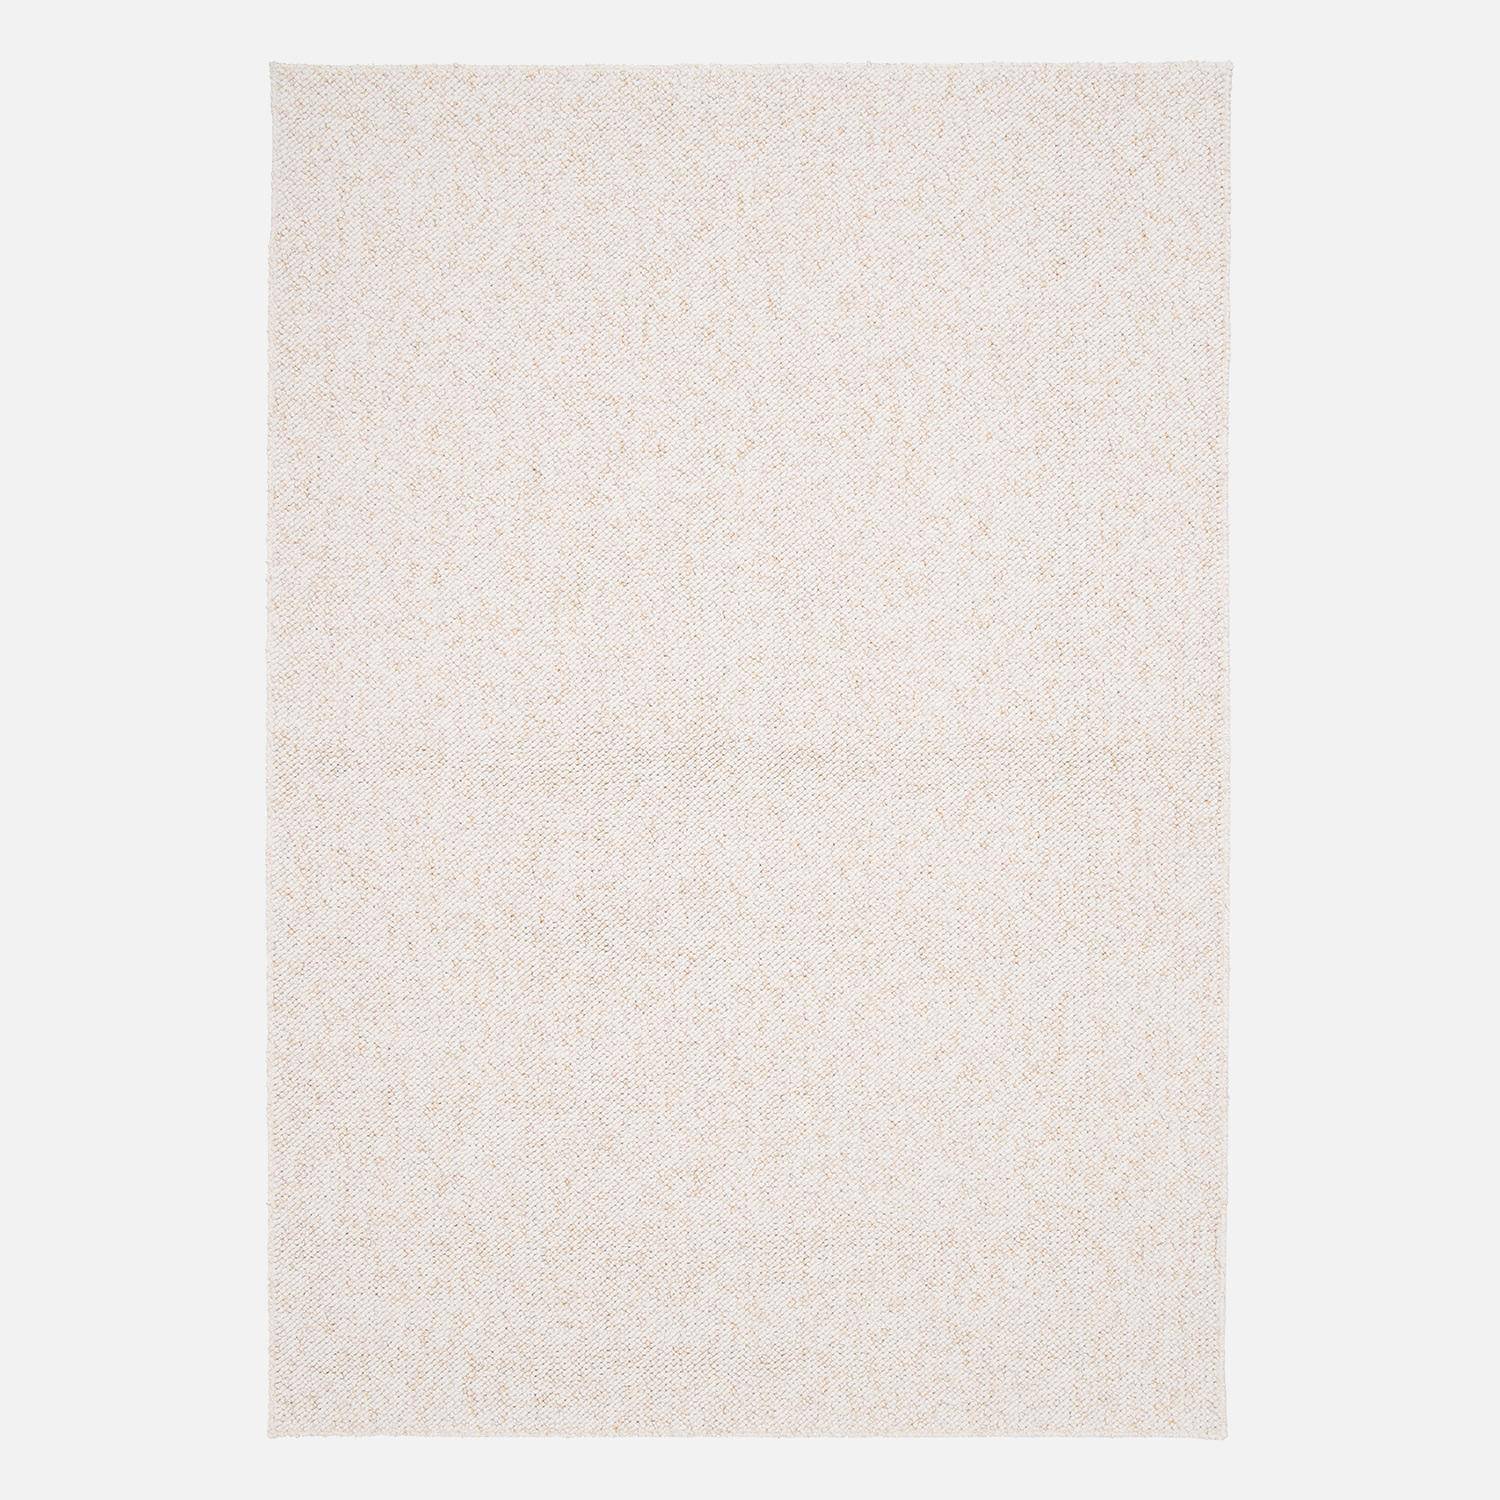 Cream mottled effect loop pile interior rug, Walter, 160 x 230 cm Photo1